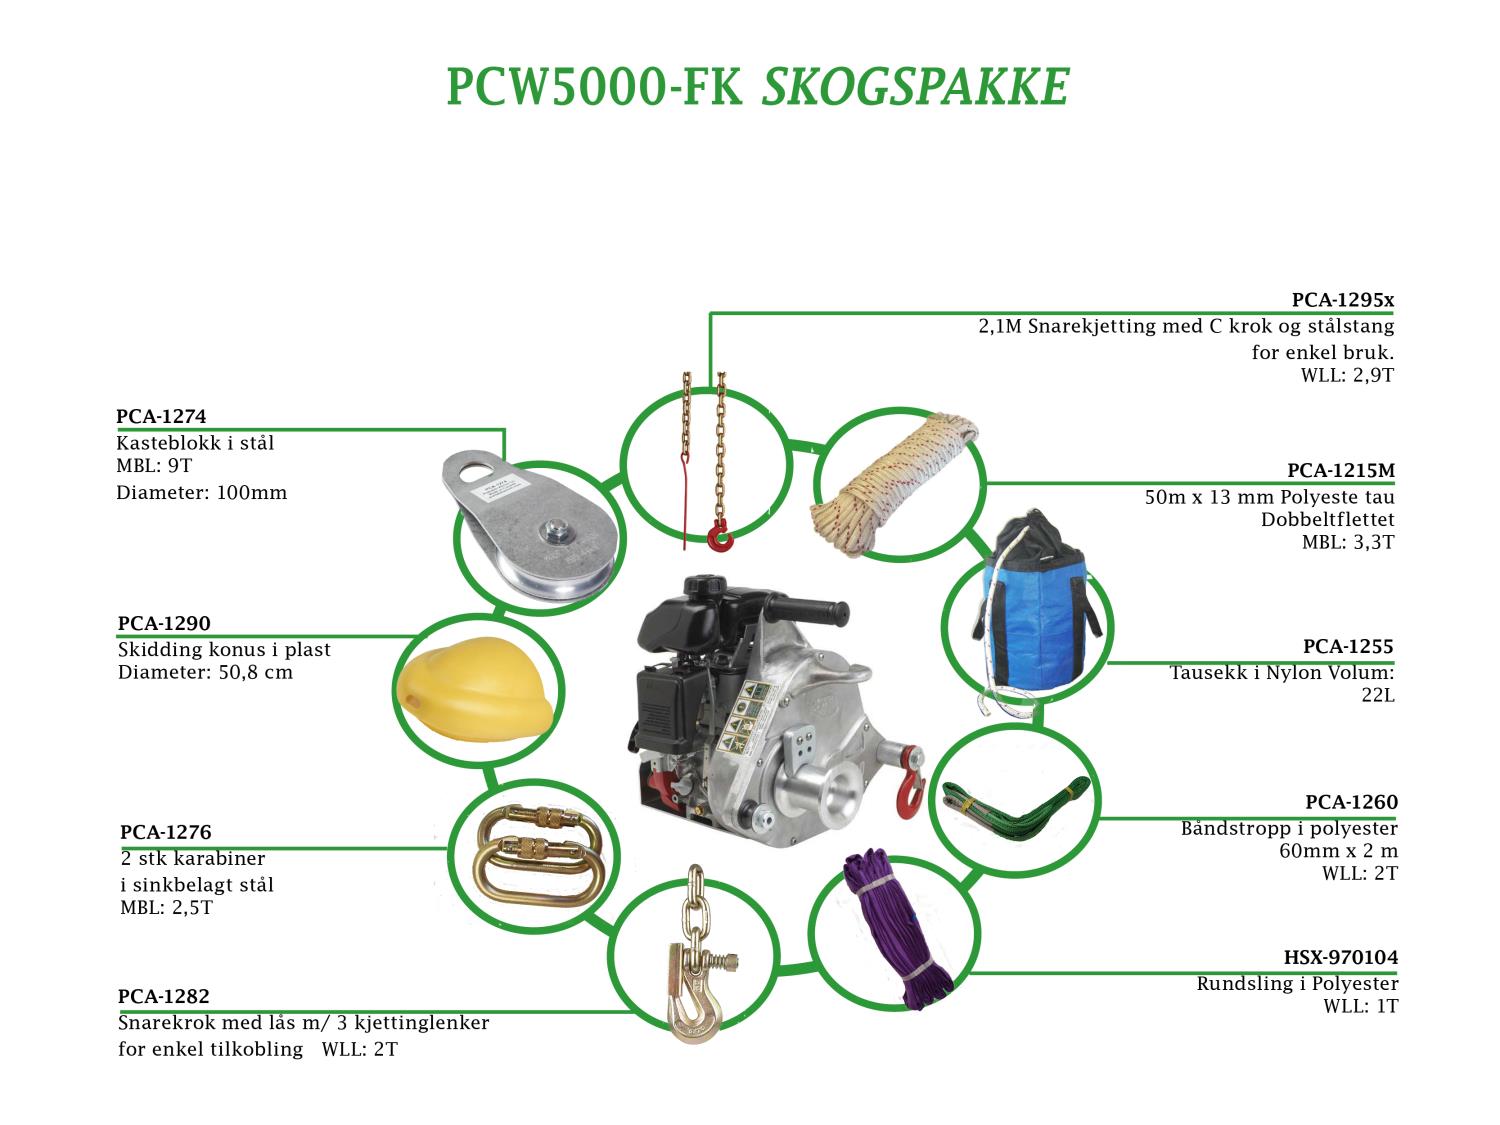 PCW-5000FK Skogspakke